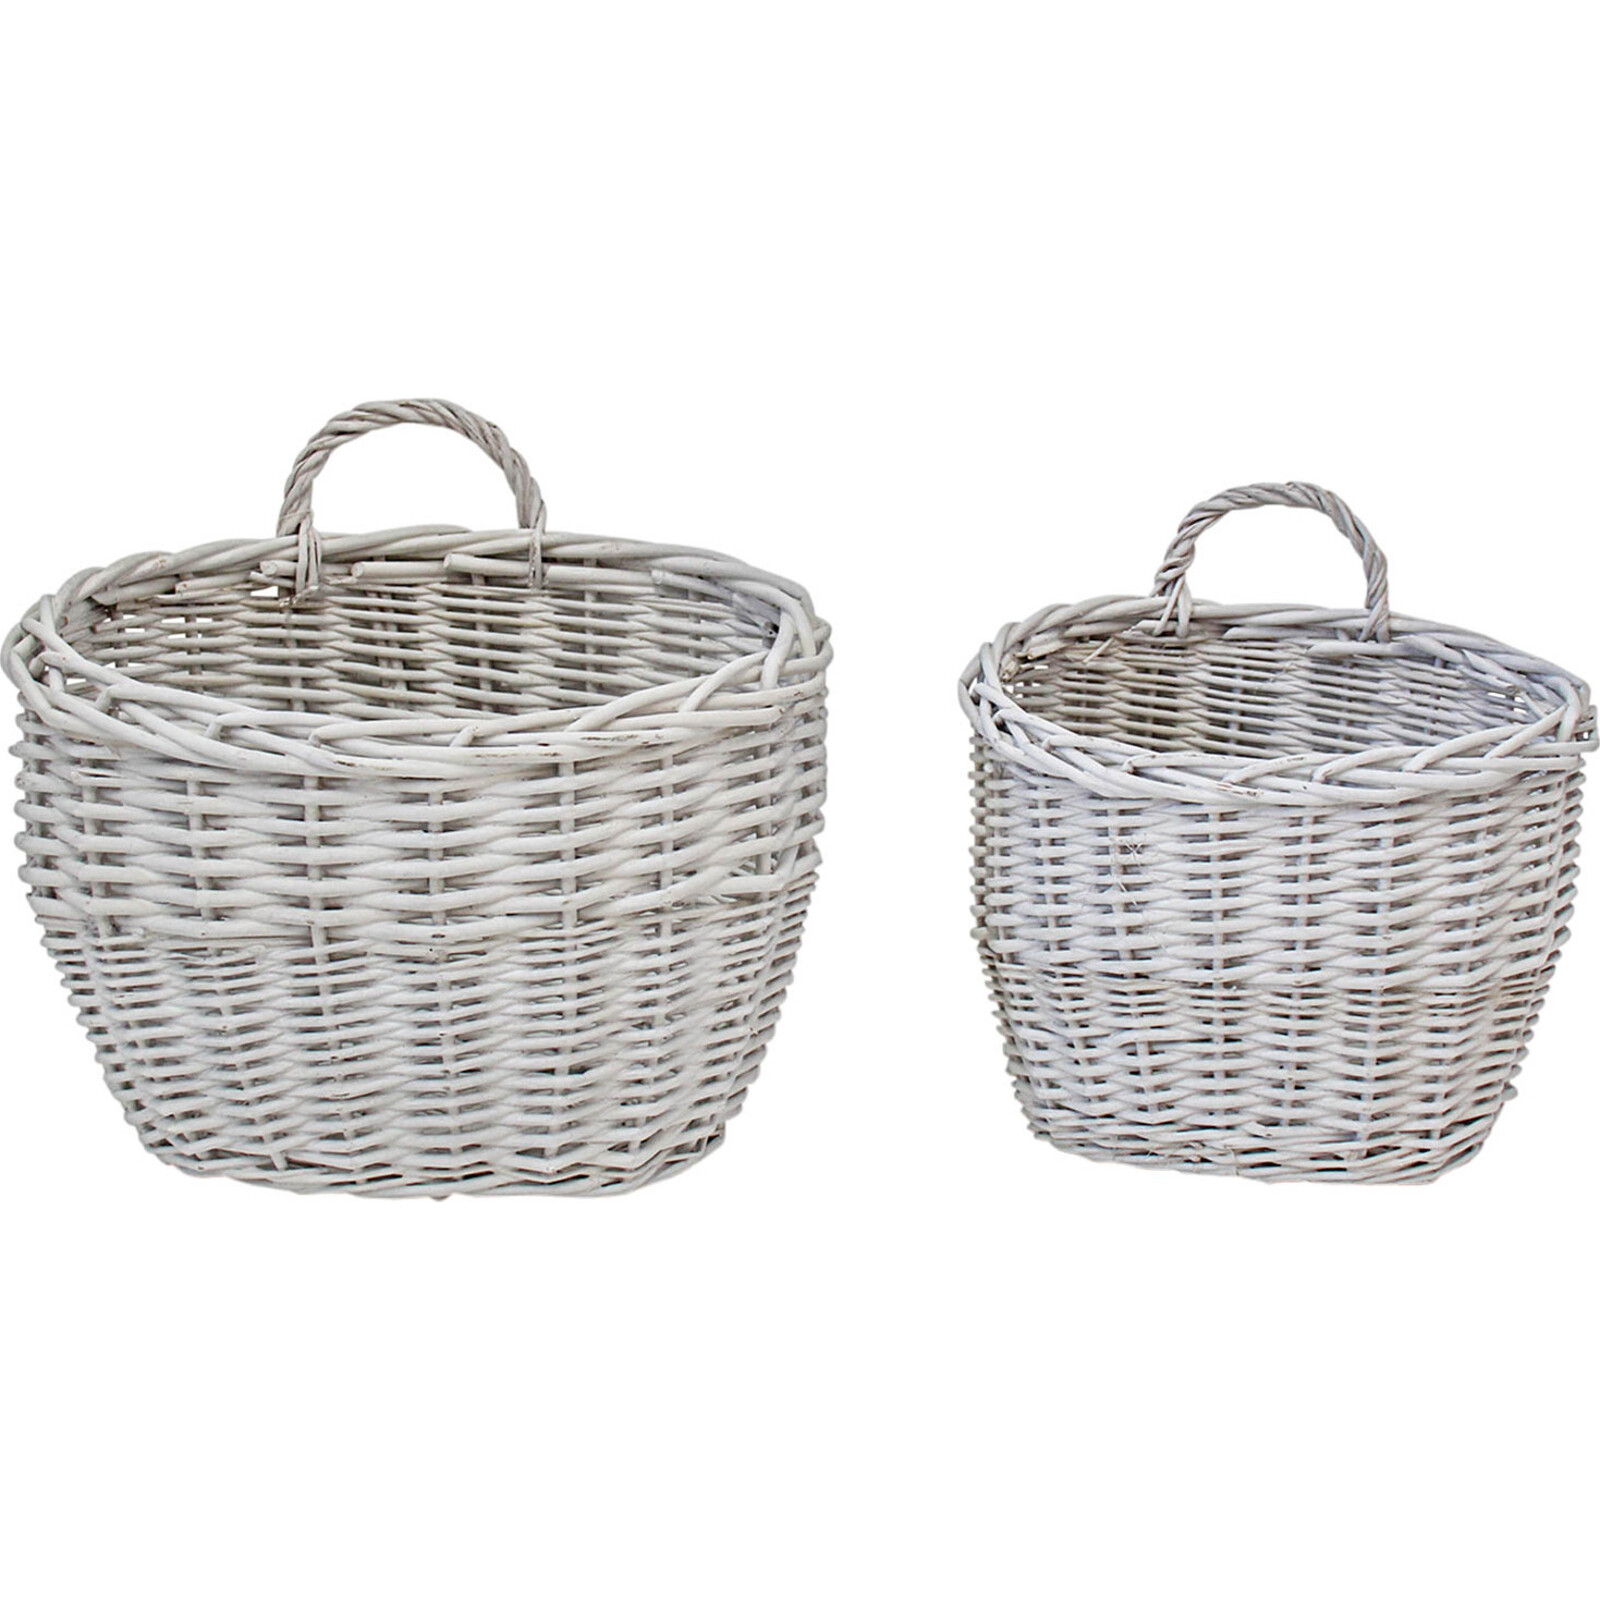 Baskets Halsey White S/2